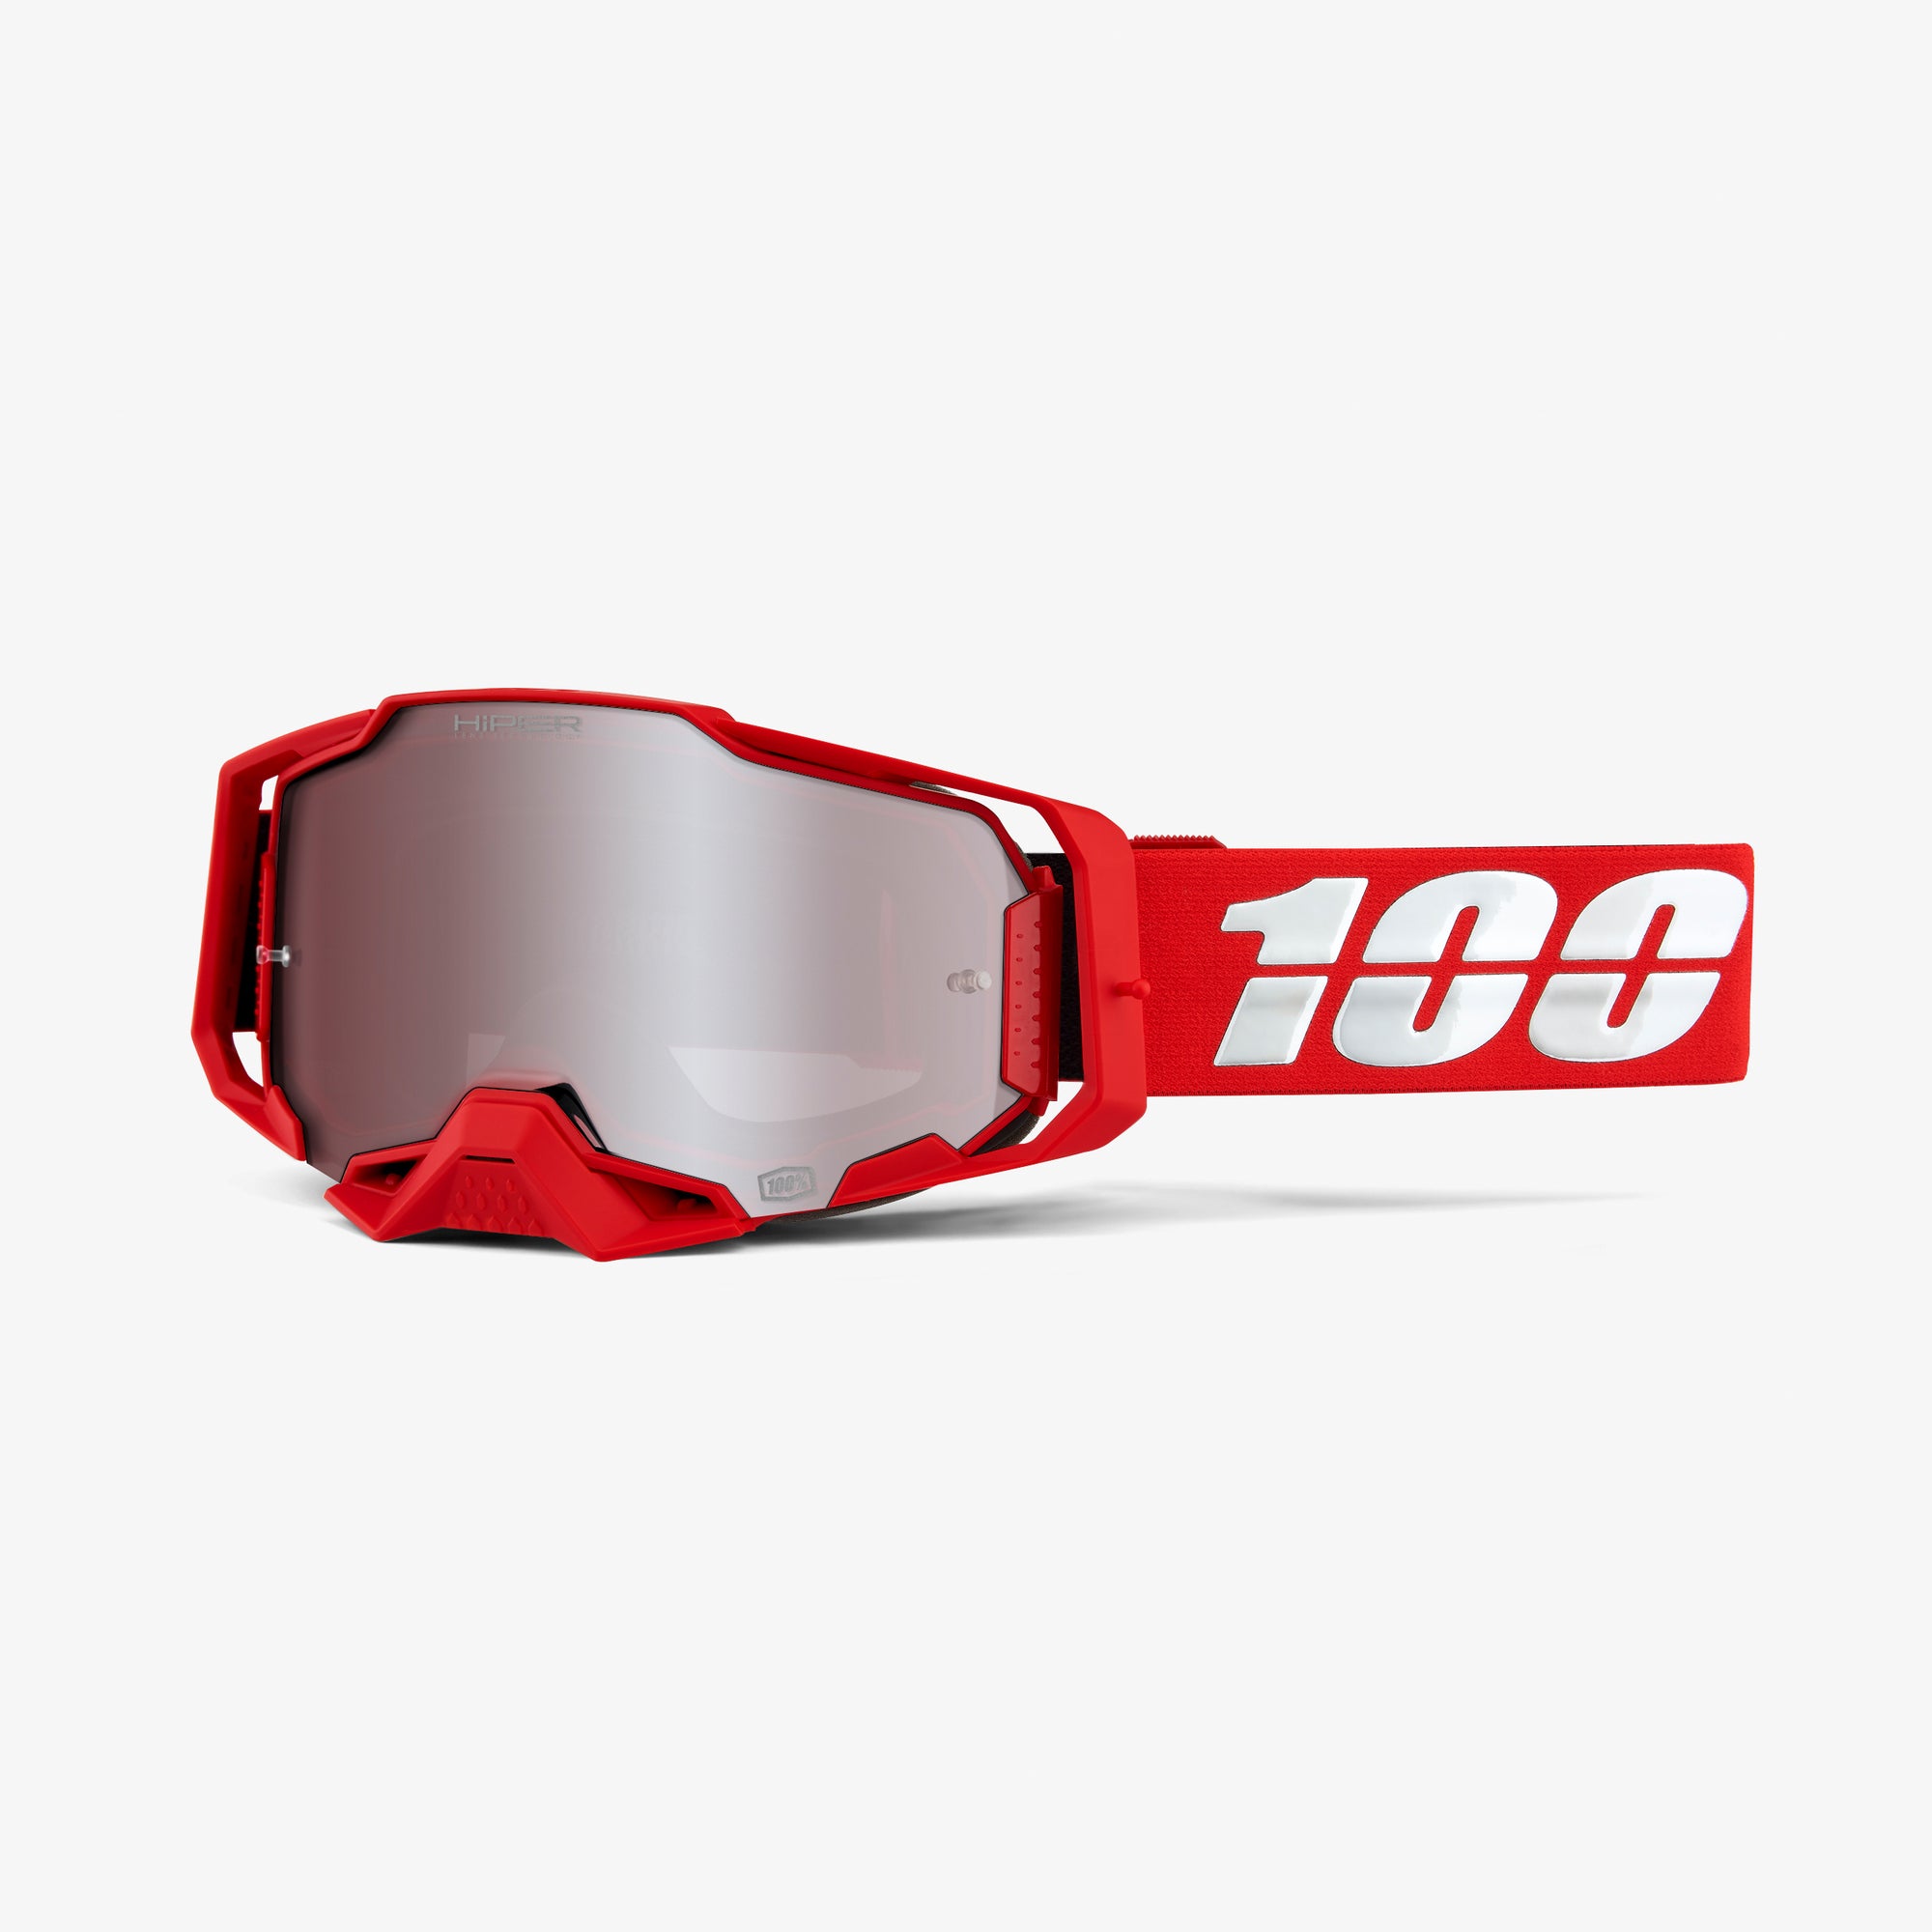 ARMEGA War Red Goggles – 100%